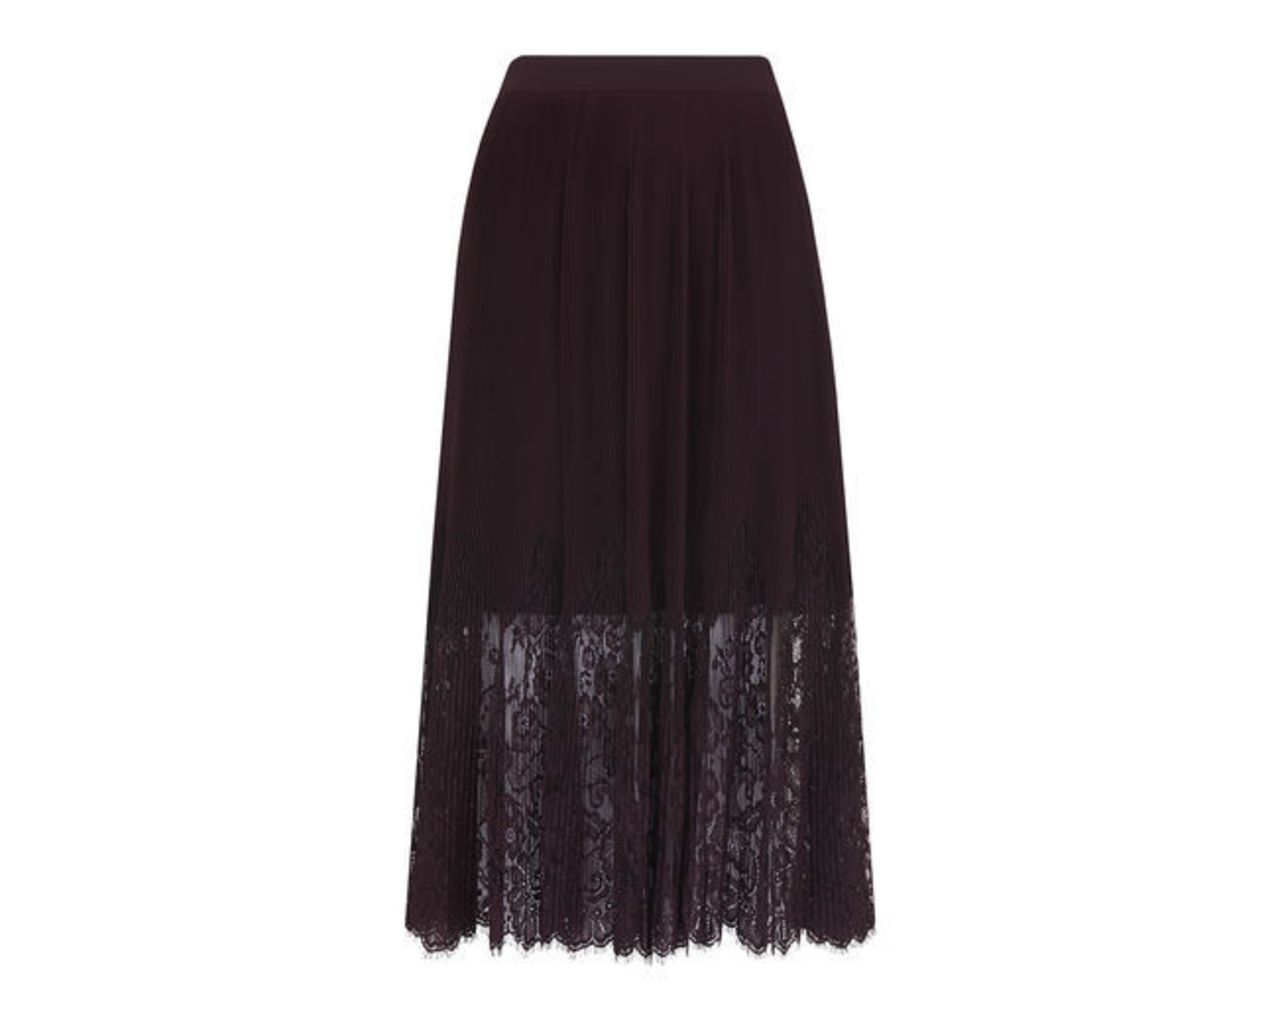 Lillian Pleated Lace Skirt